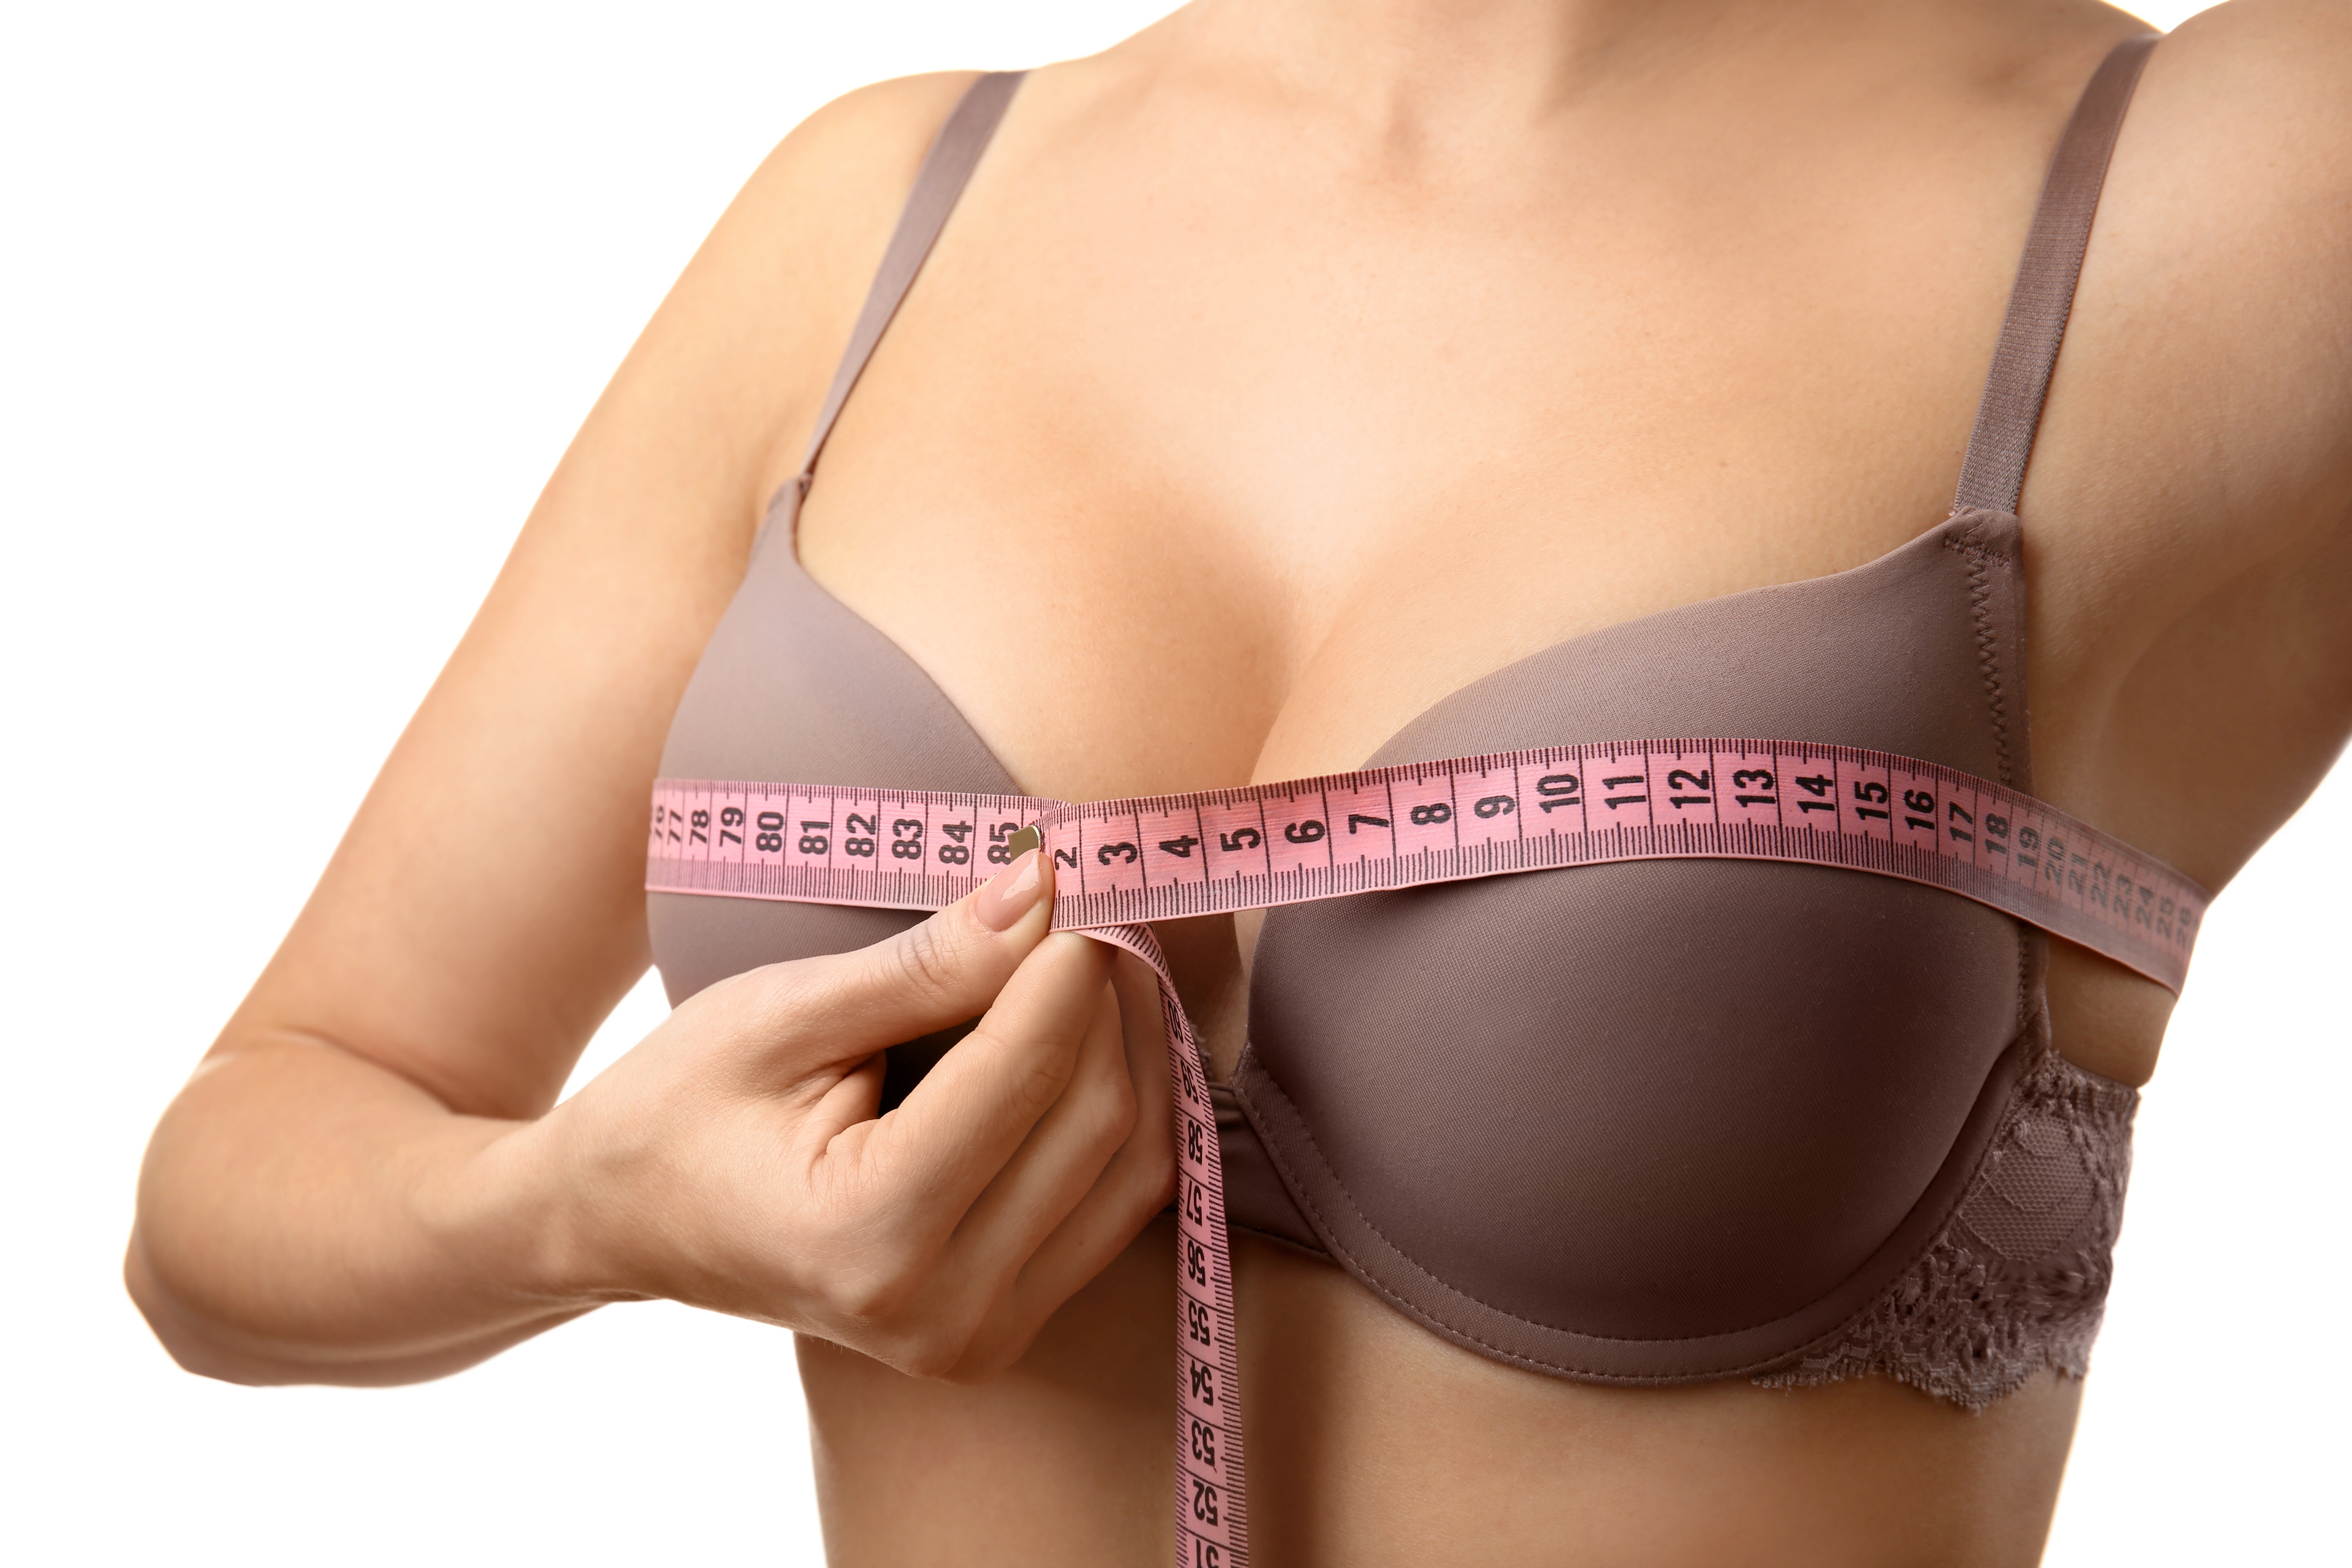 People 5760x3840 bra boobs women simple background measuring tape cleavage